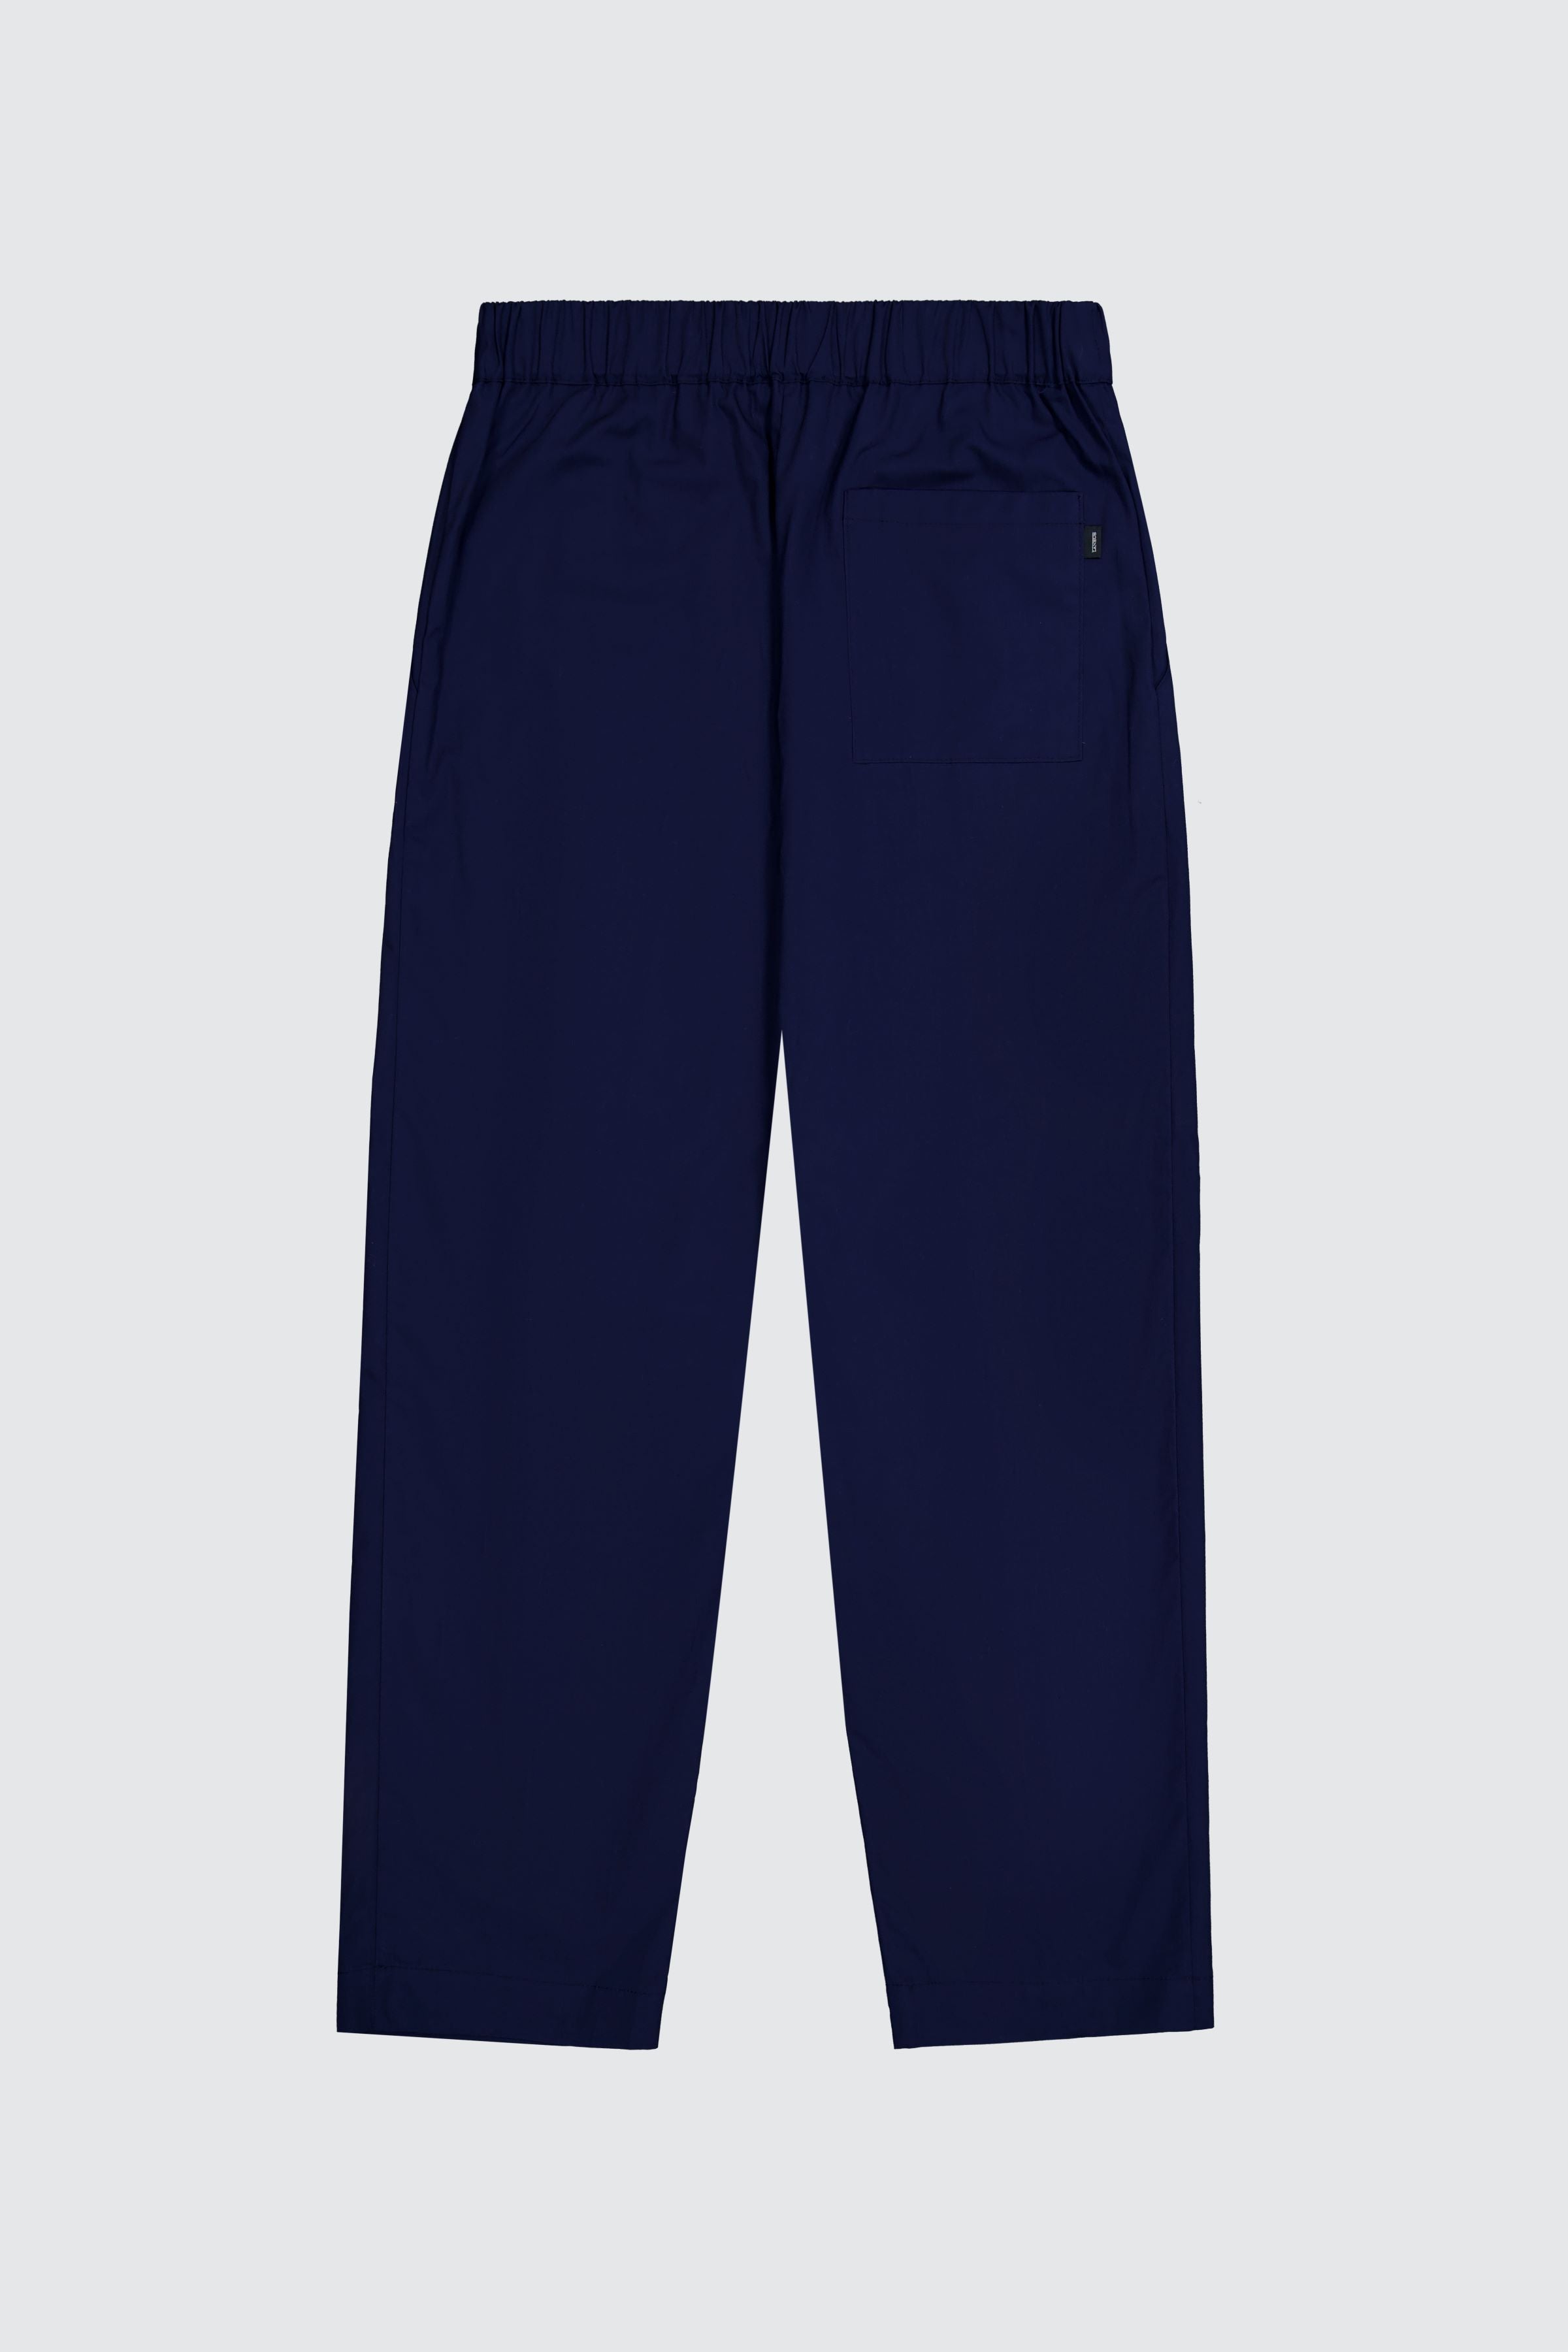 Laneus pantalone blu navy dal fit oversize